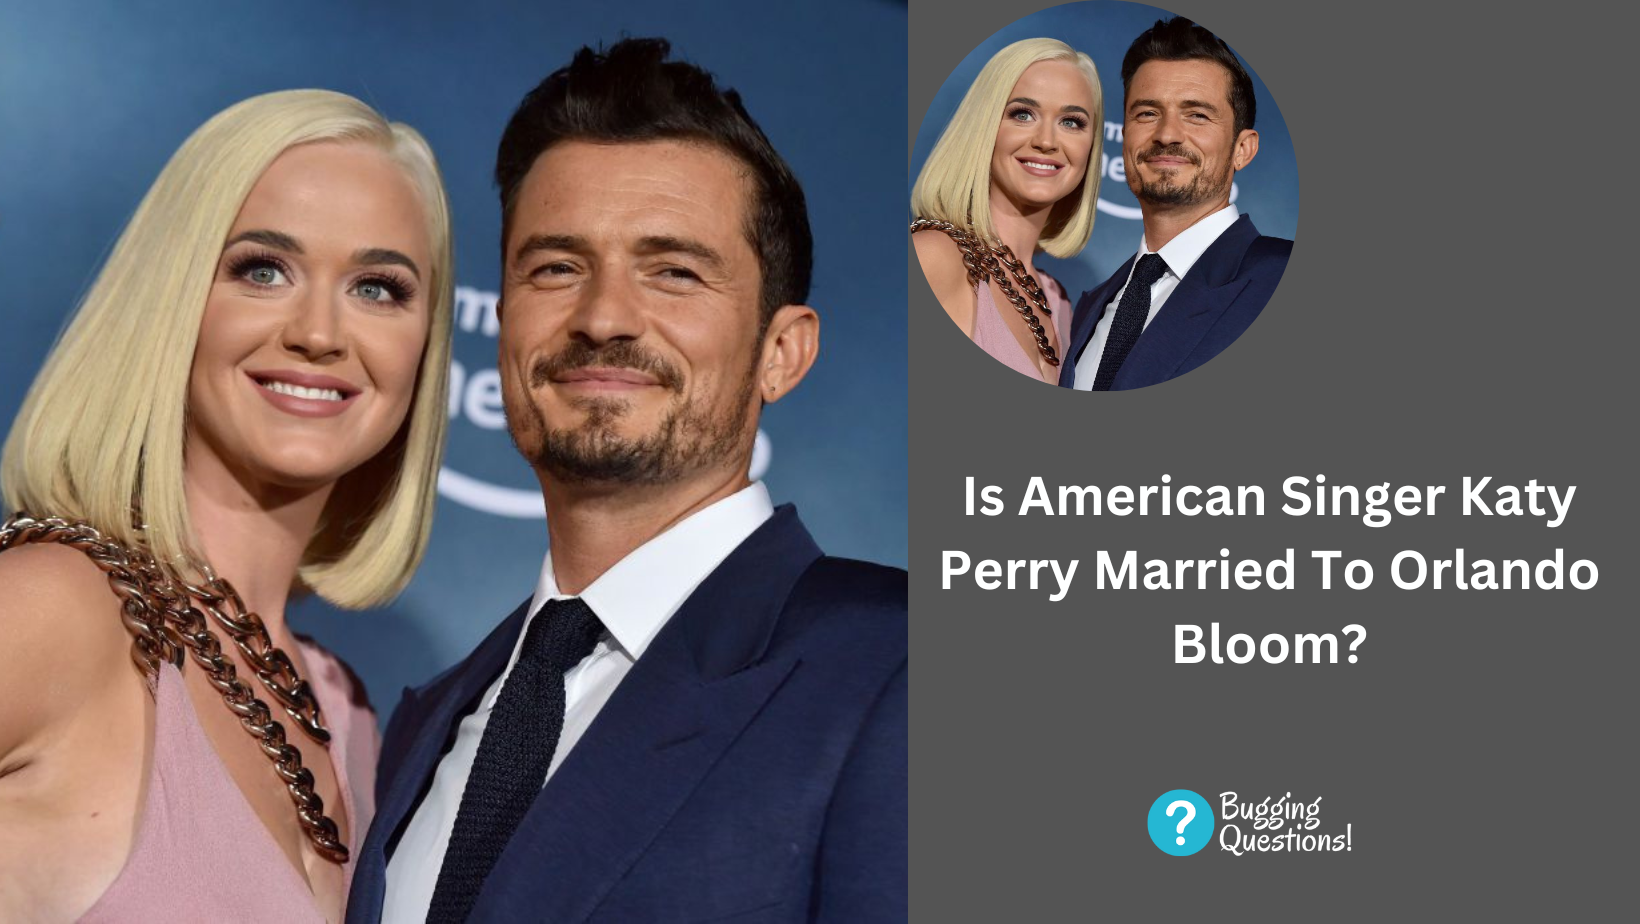 Is American Singer Katy Perry Married To Orlando Bloom?